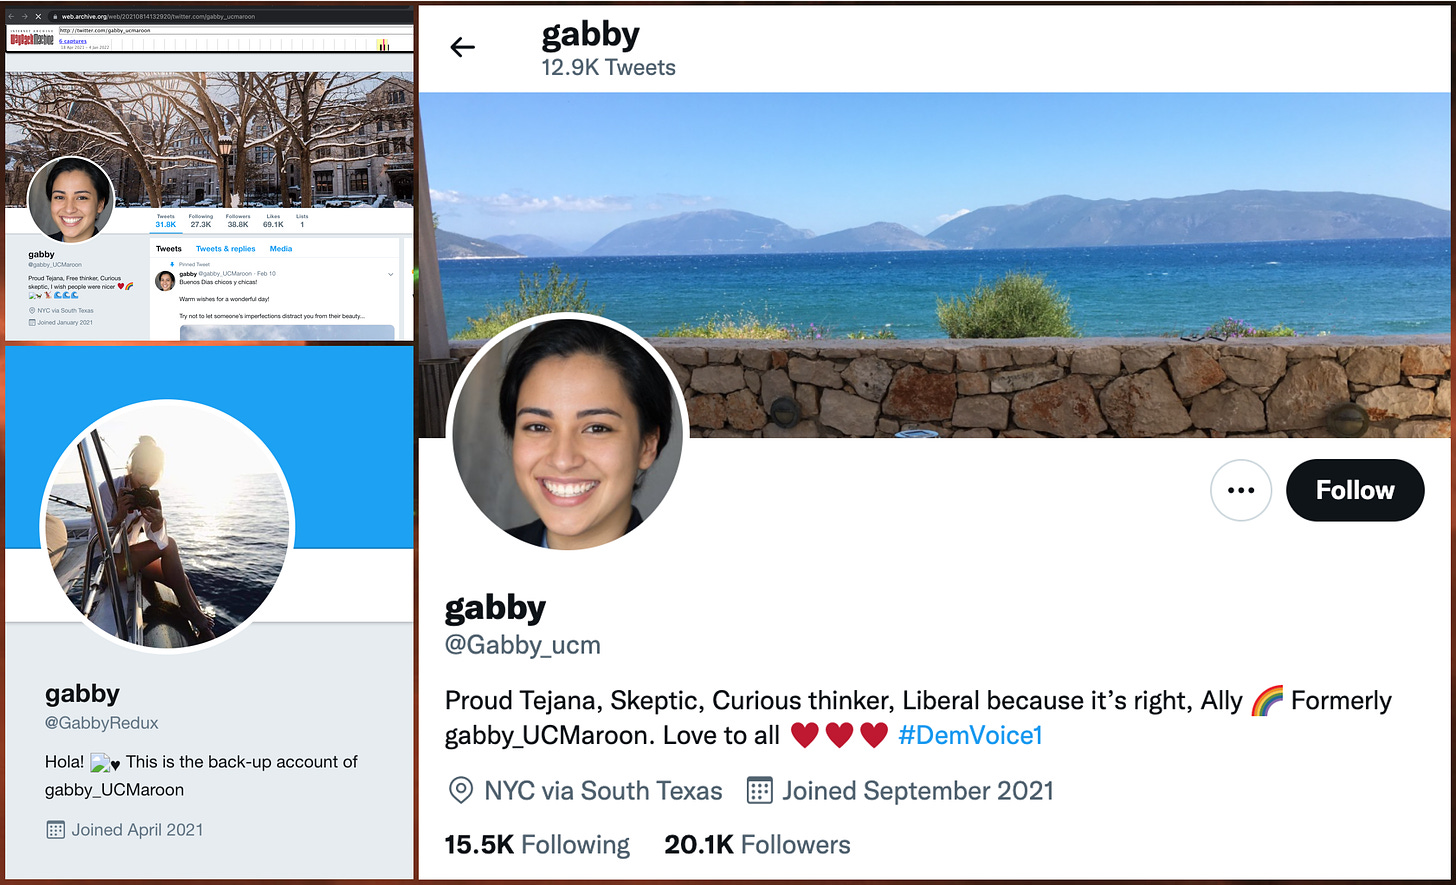 screenshots of the profiles of the "Gabby" accounts: @Gabby_UCMaroon, @GabbyRedux, and @gabby_ucm